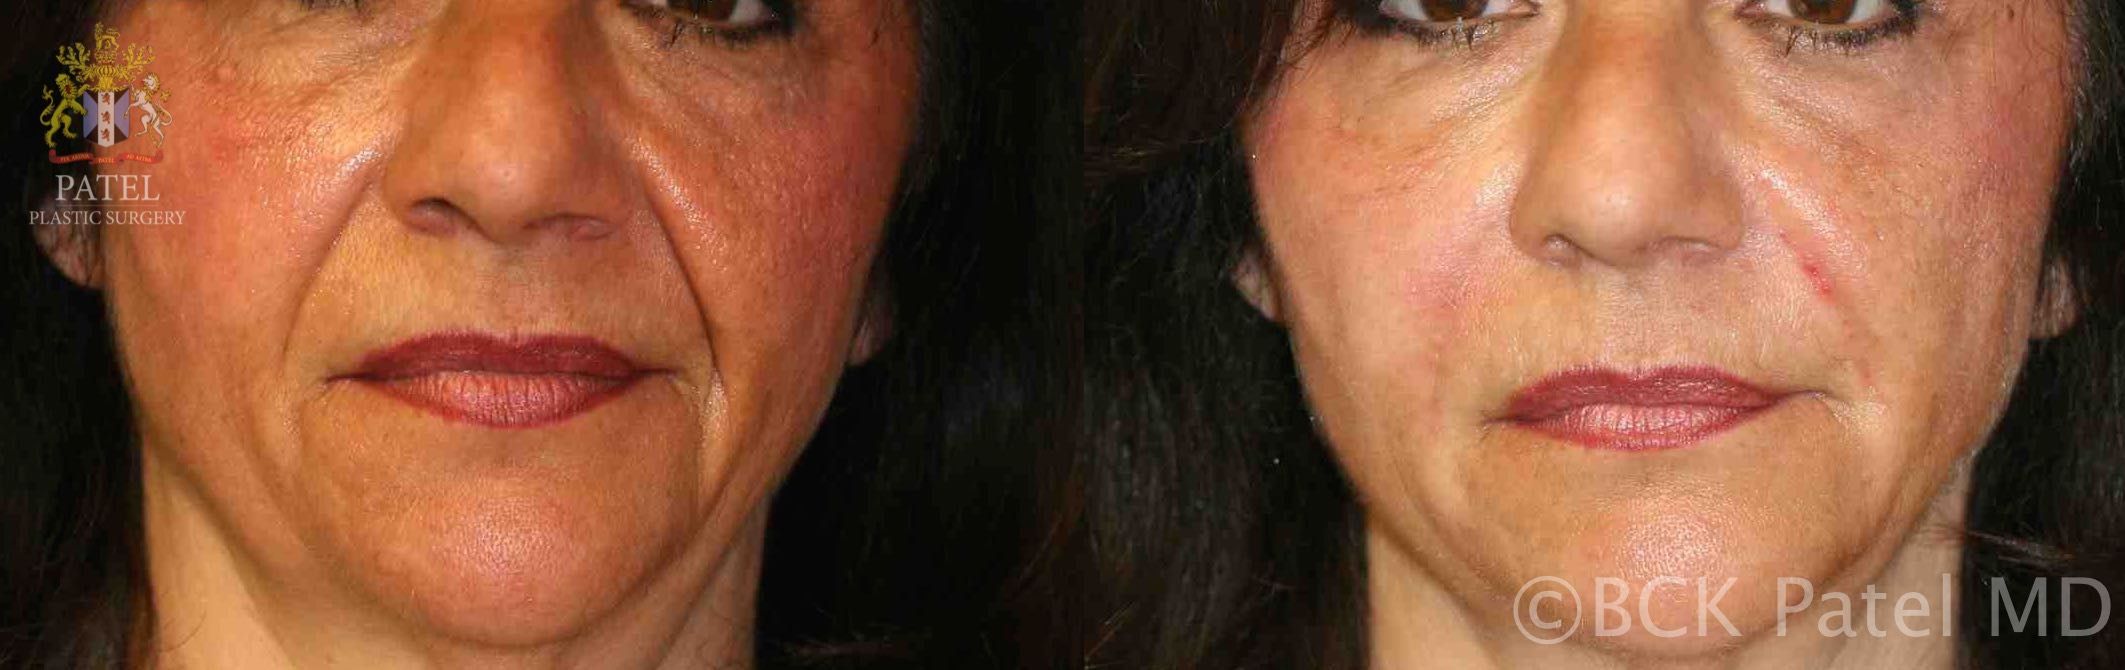 englishsurgeon.com. Photos showing improvement of the cheeks and nasolabail folds. BCK Patel MD